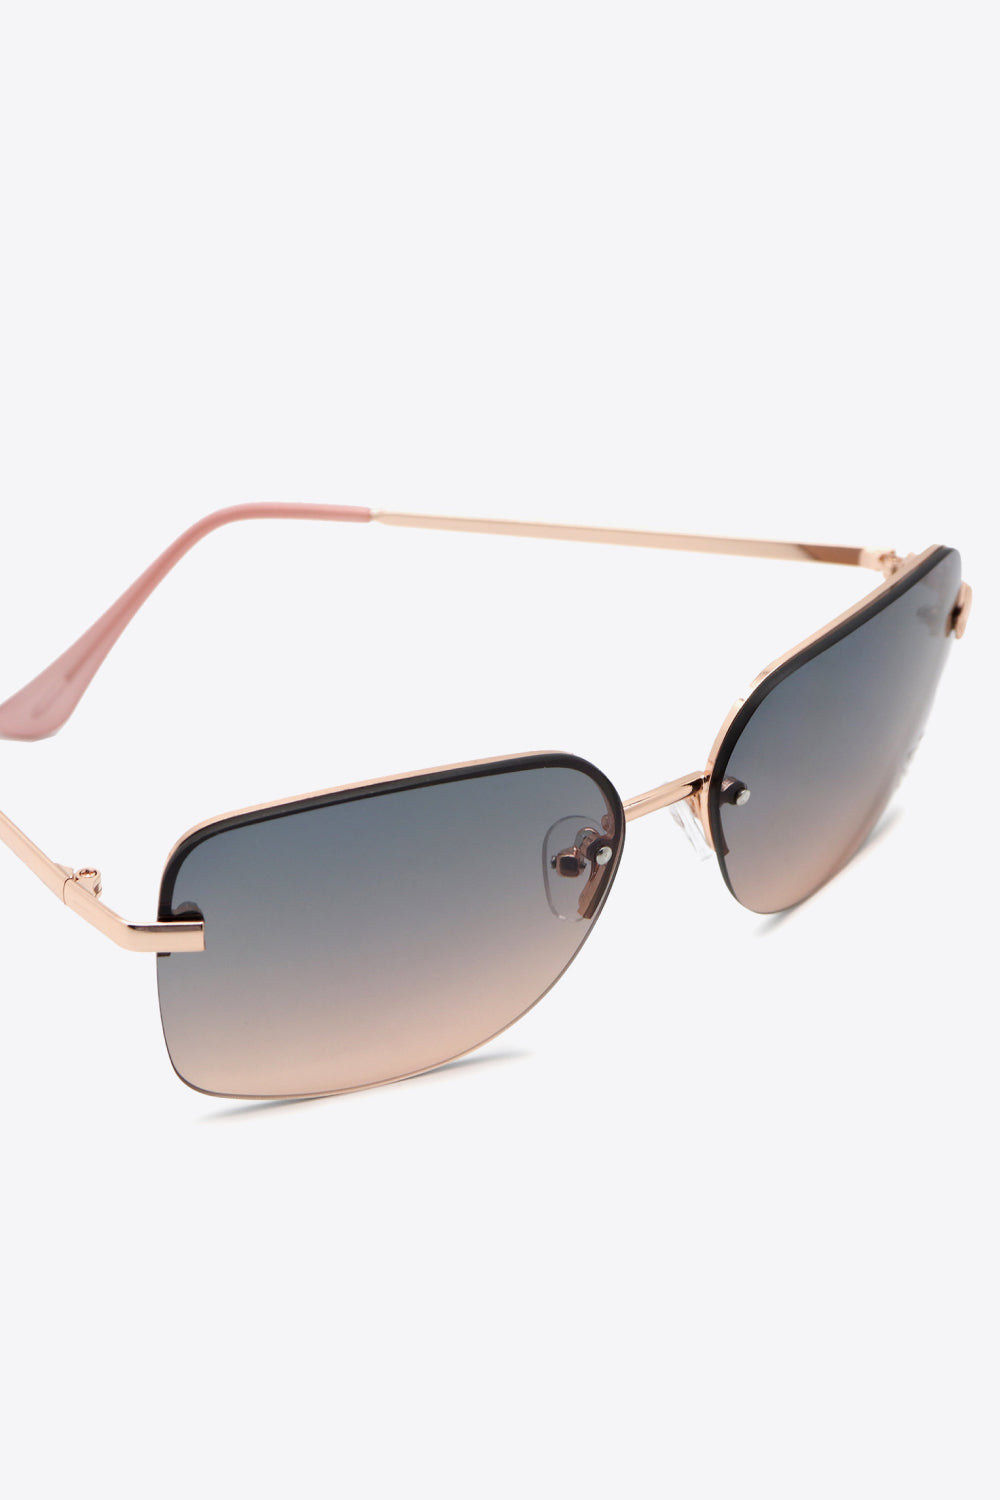 Rhinestone Heart Metal Frame Sunglasses - bertofonsi